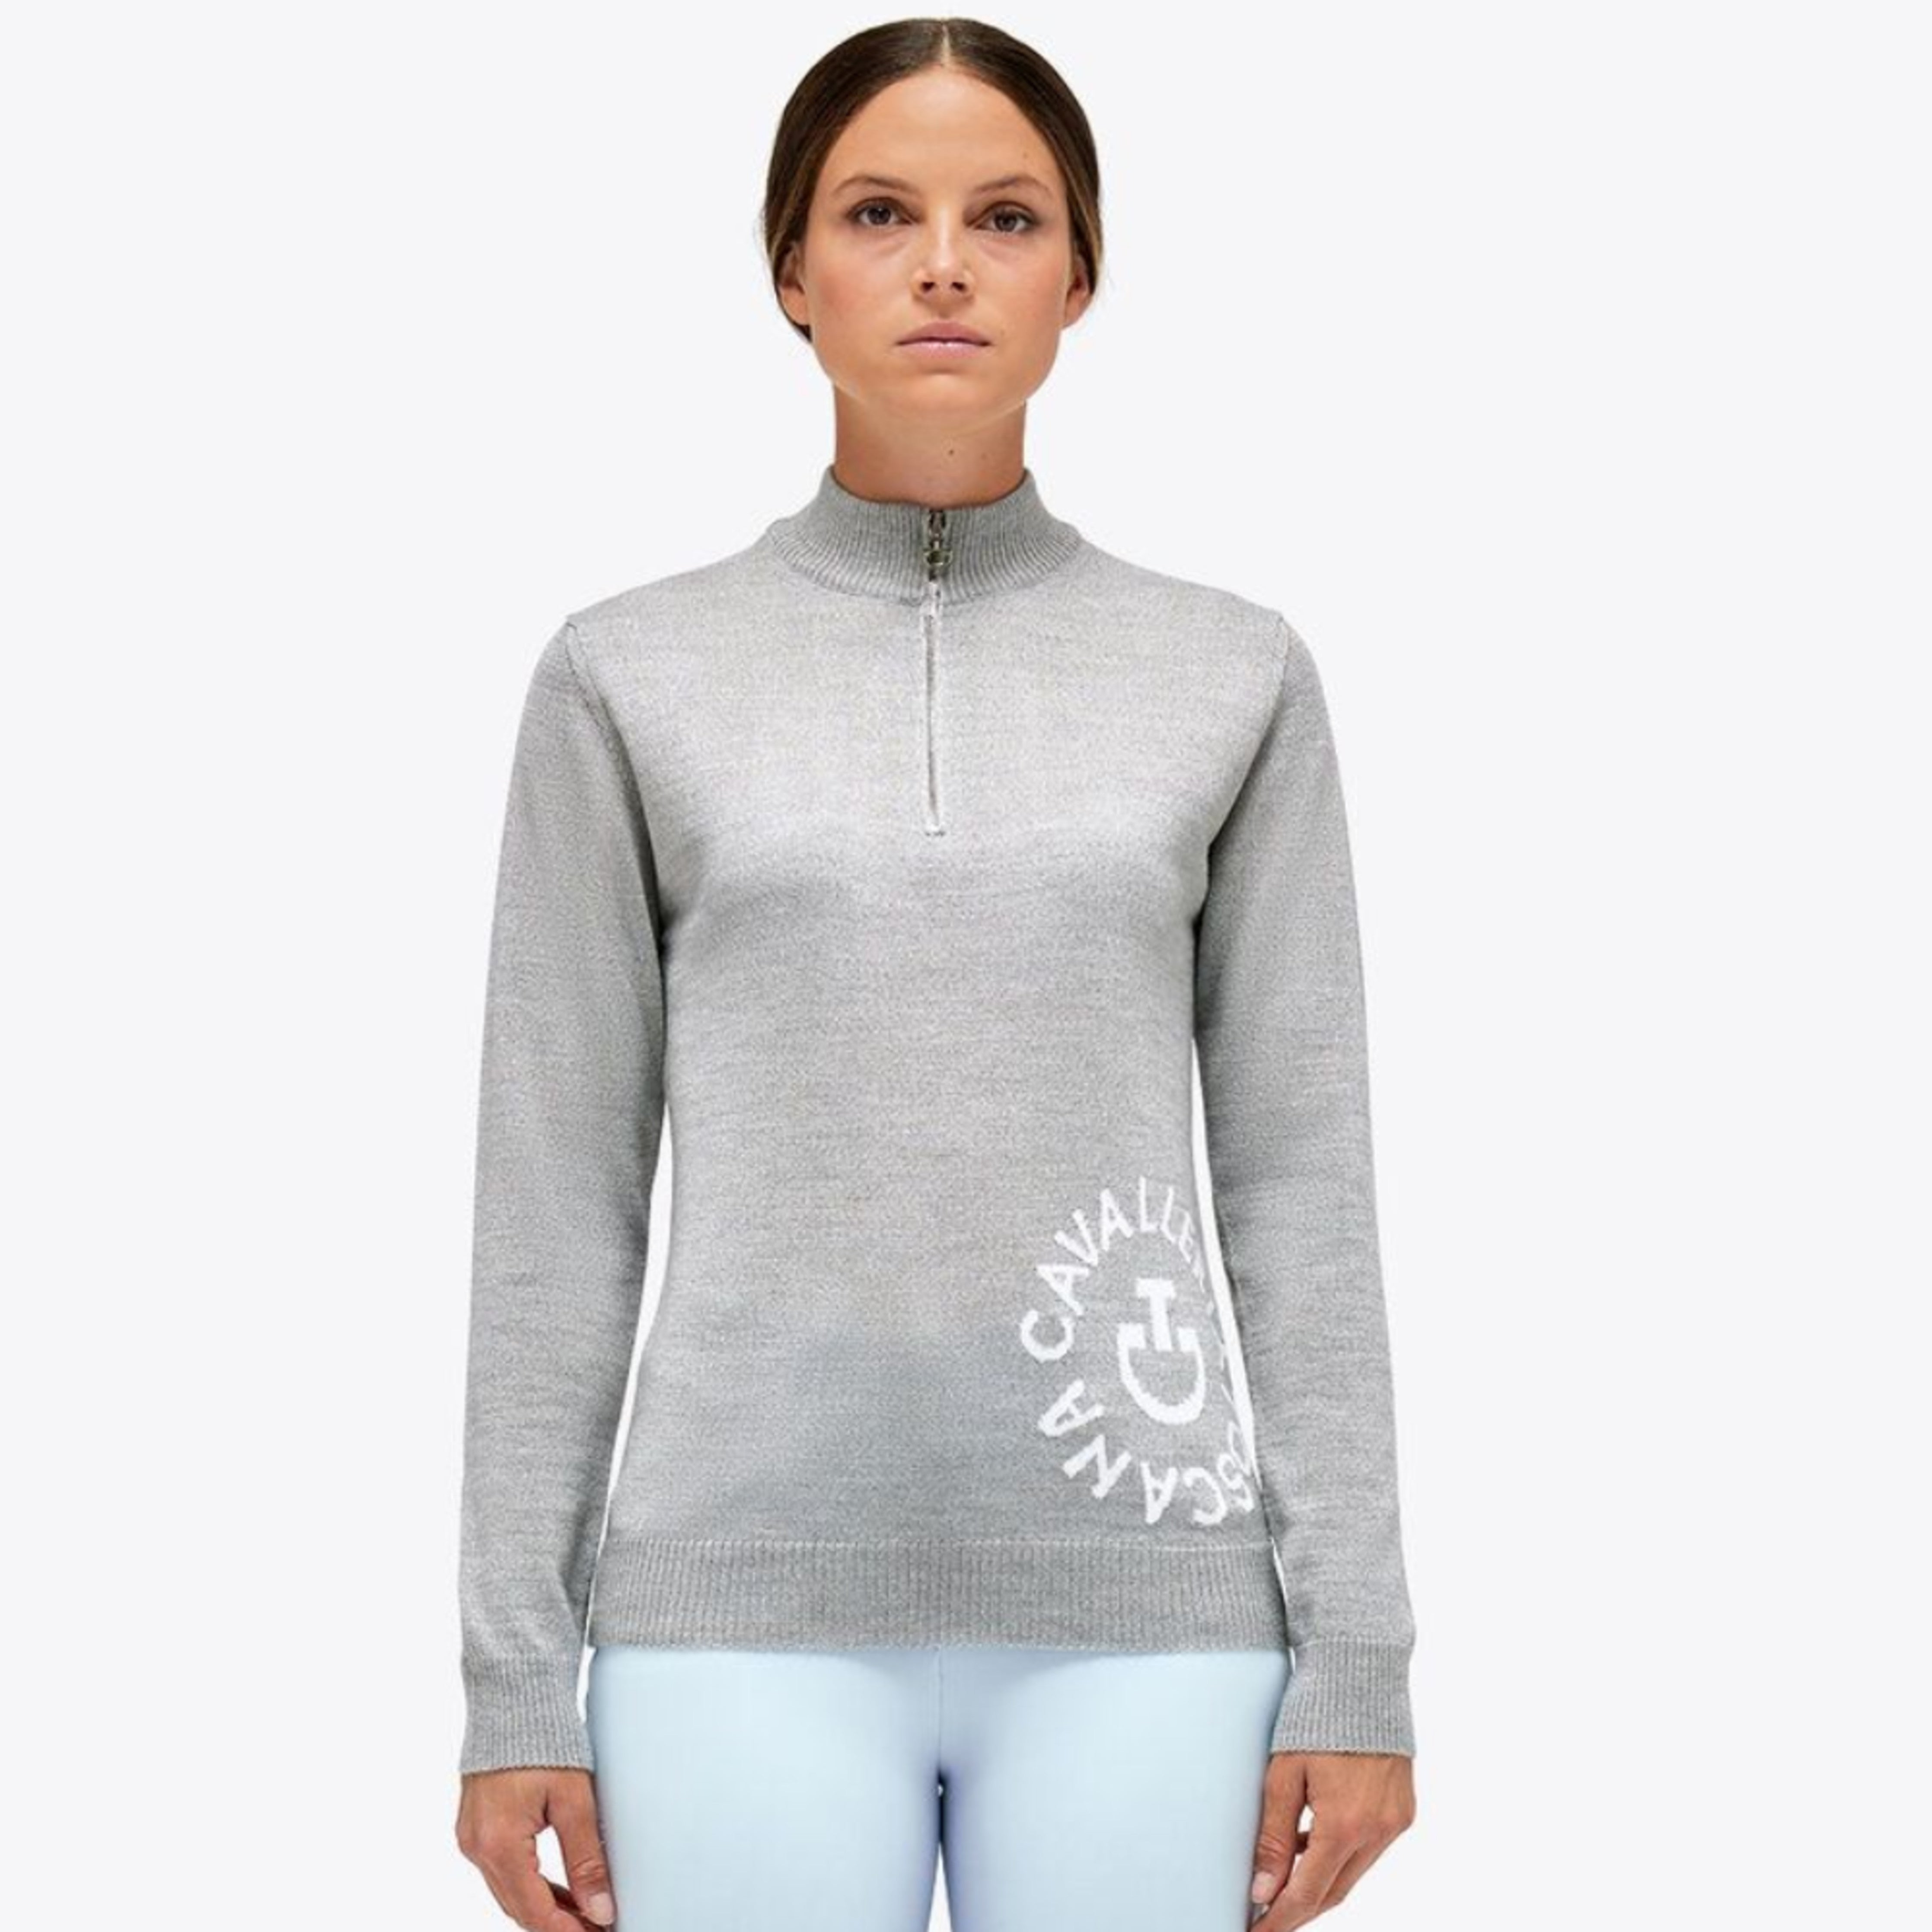 Cavalleria Toscana Orbit Half-Zip Sweater ladies